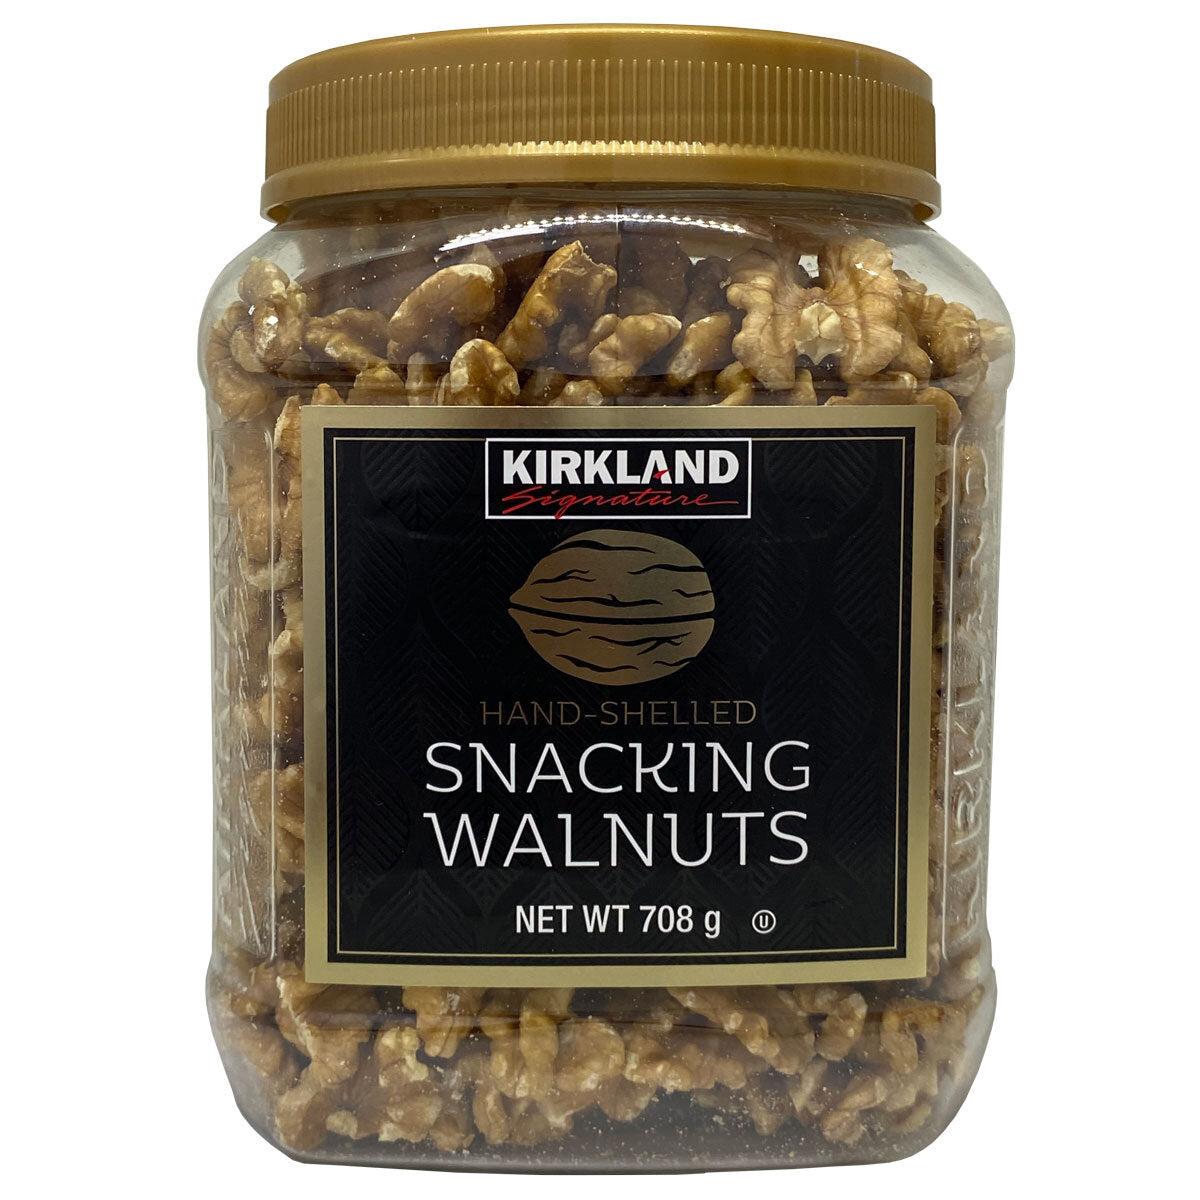 Kirkland Signature Hand-Shelled Snacking Walnuts, 708g - McGrocer